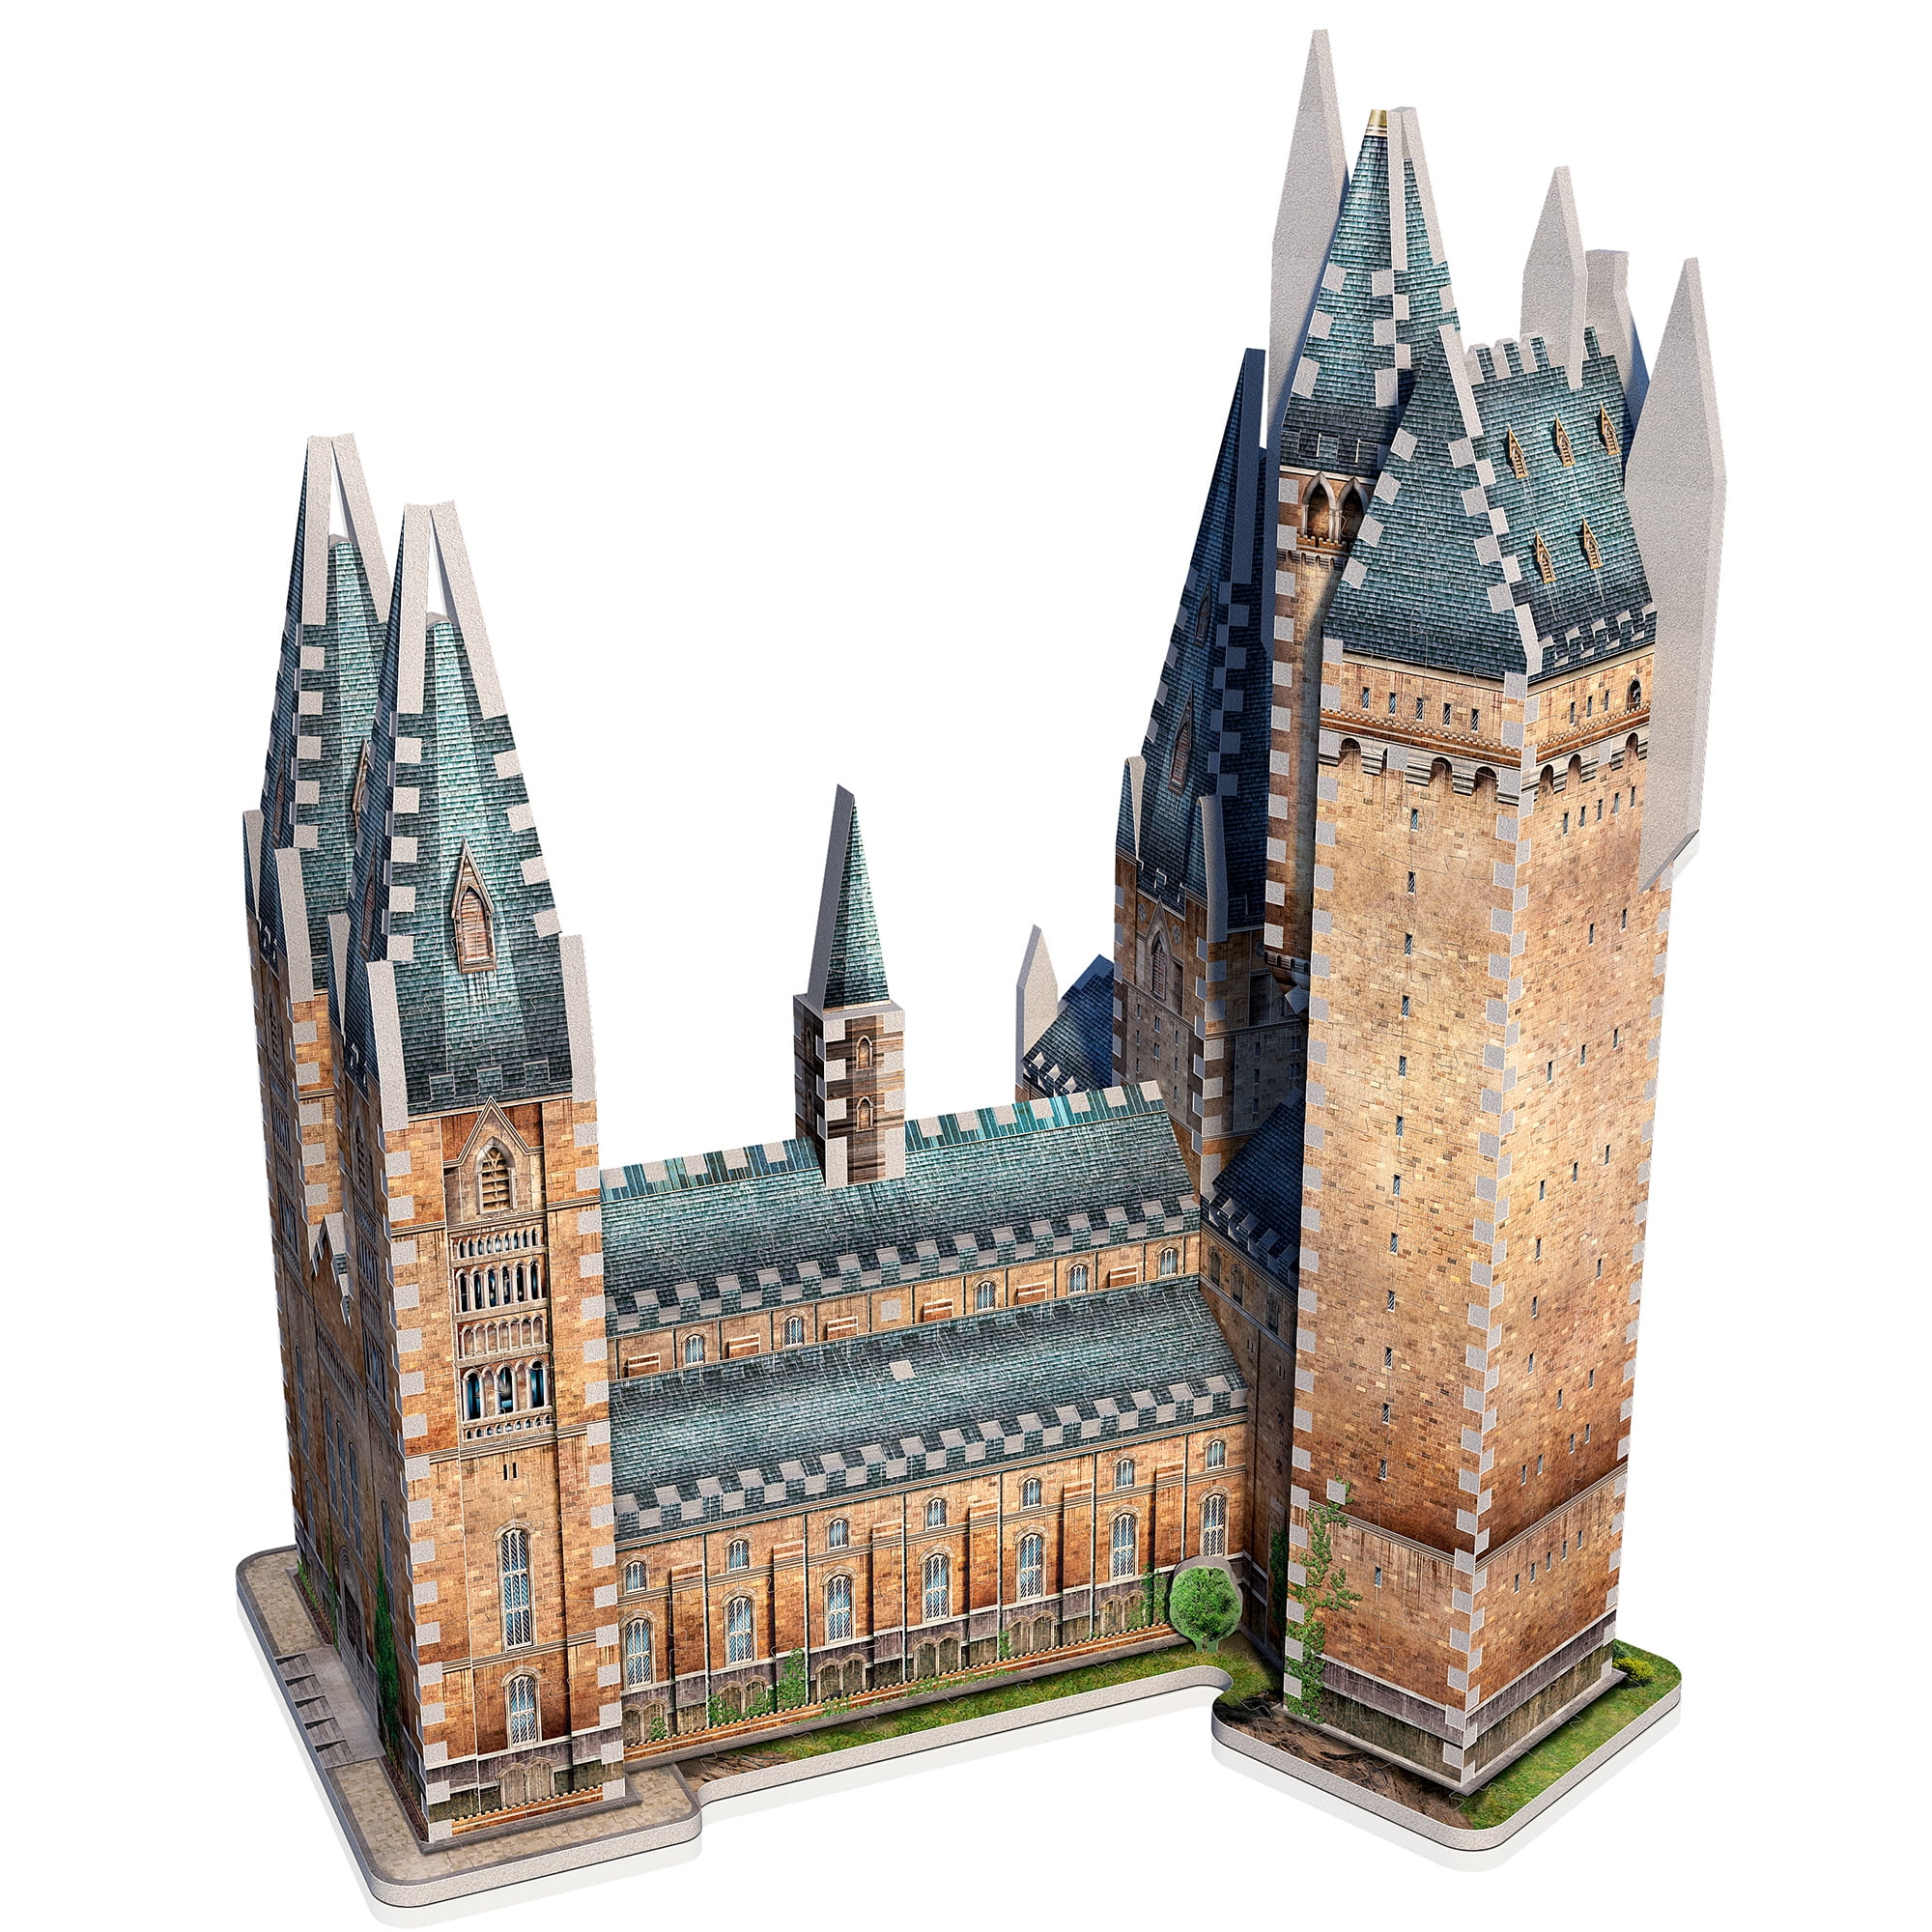 Wrebbit 3D - Harry Potter Hogwarts Castle 1,725 Piece 3D Jigsaw